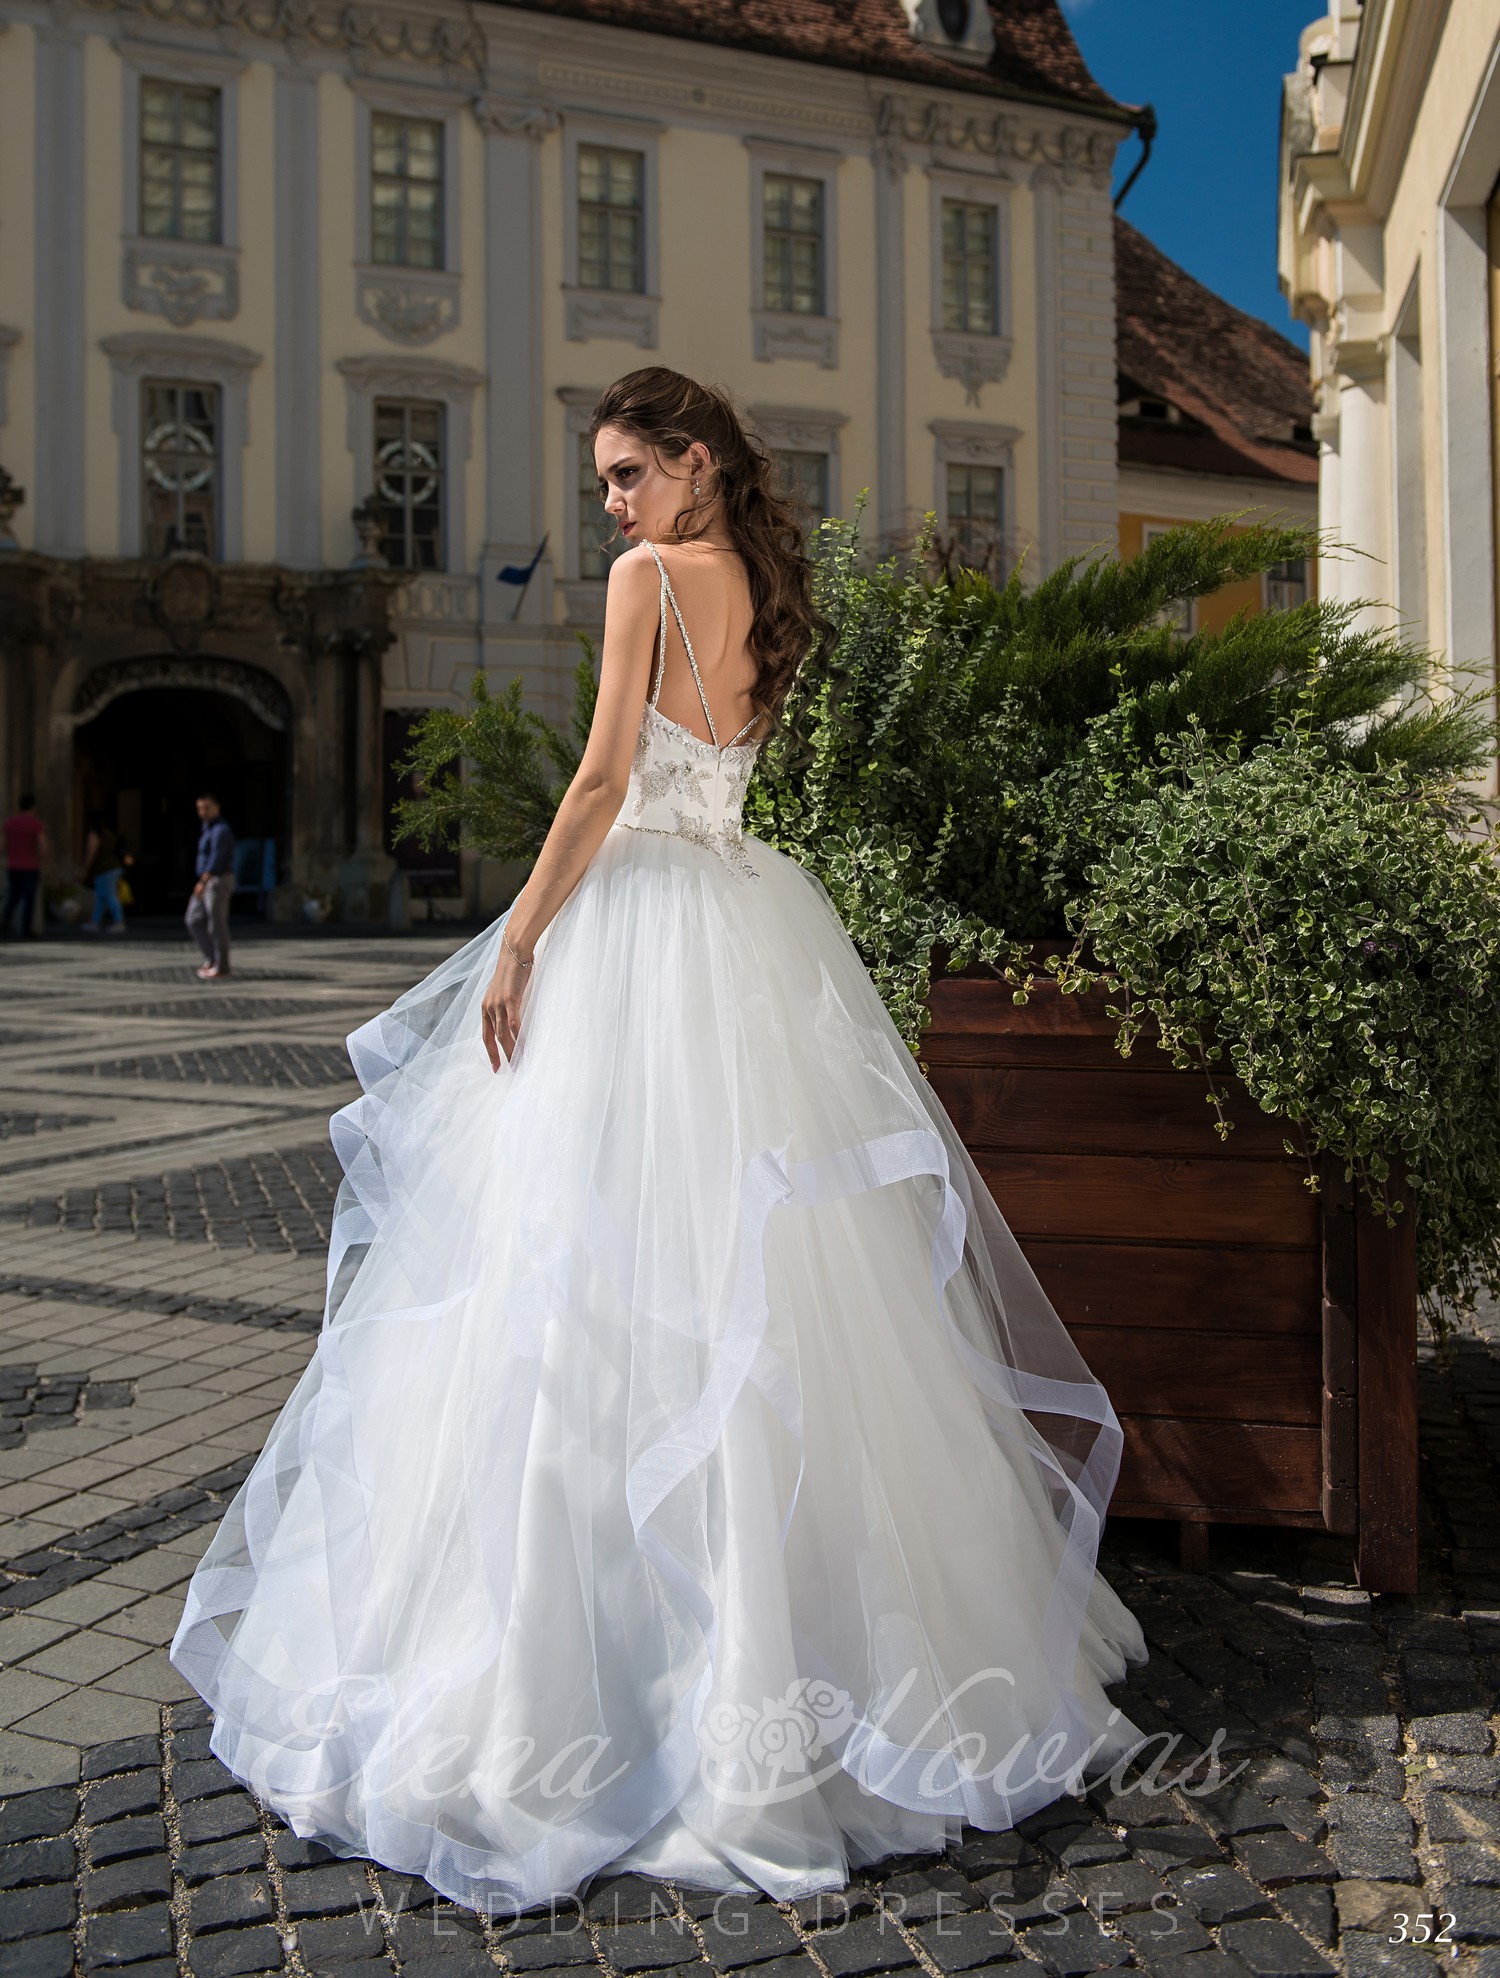 Wedding dress with flounces by Elena Novias wholesale